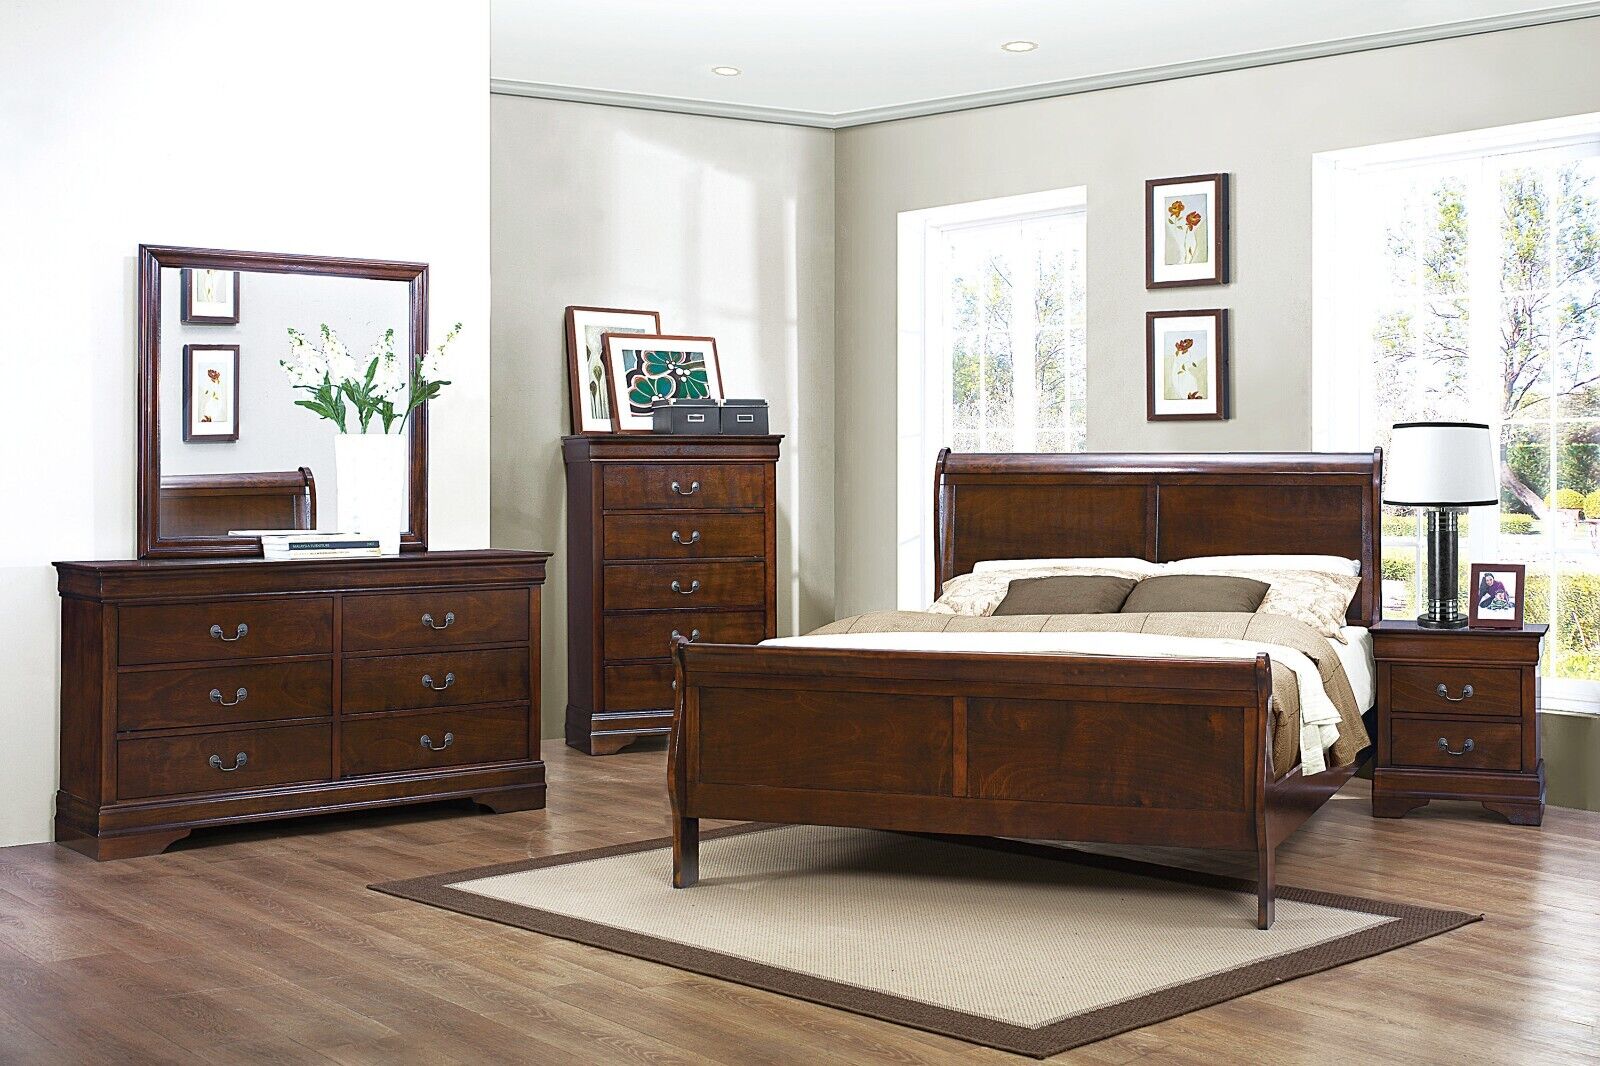 Esofastore Brown Cherry Finish 5pc King Bedroom Set Louis Phillipe Bed Dresser Chest Mirror Nightstand Wooden Furniture